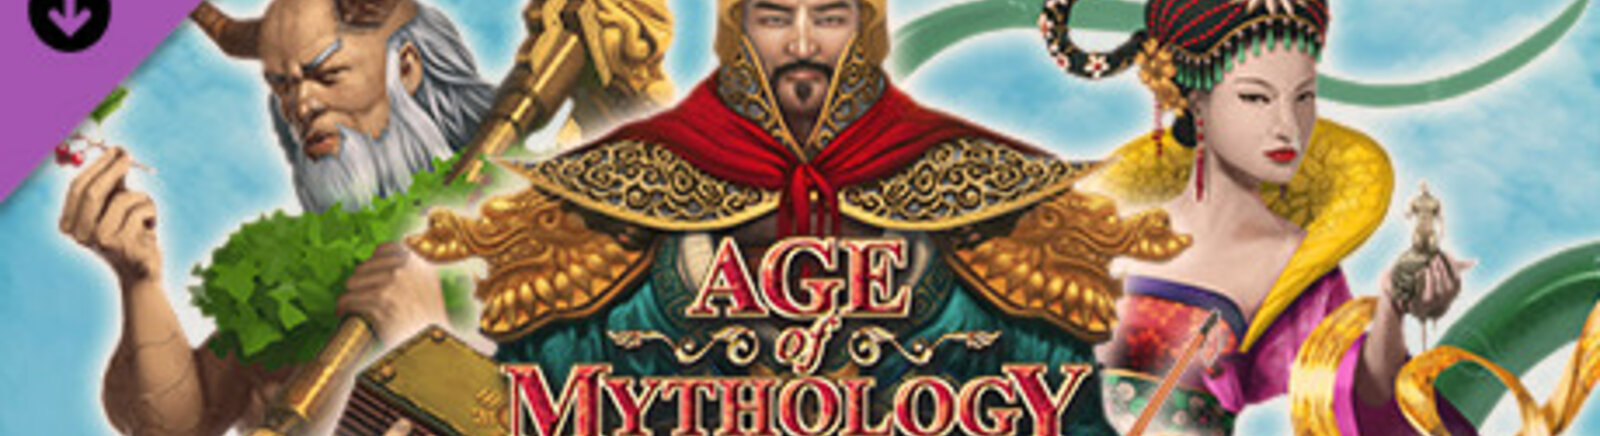 Дата выхода Age of Mythology: Tale of the Dragon  на PC в России и во всем мире